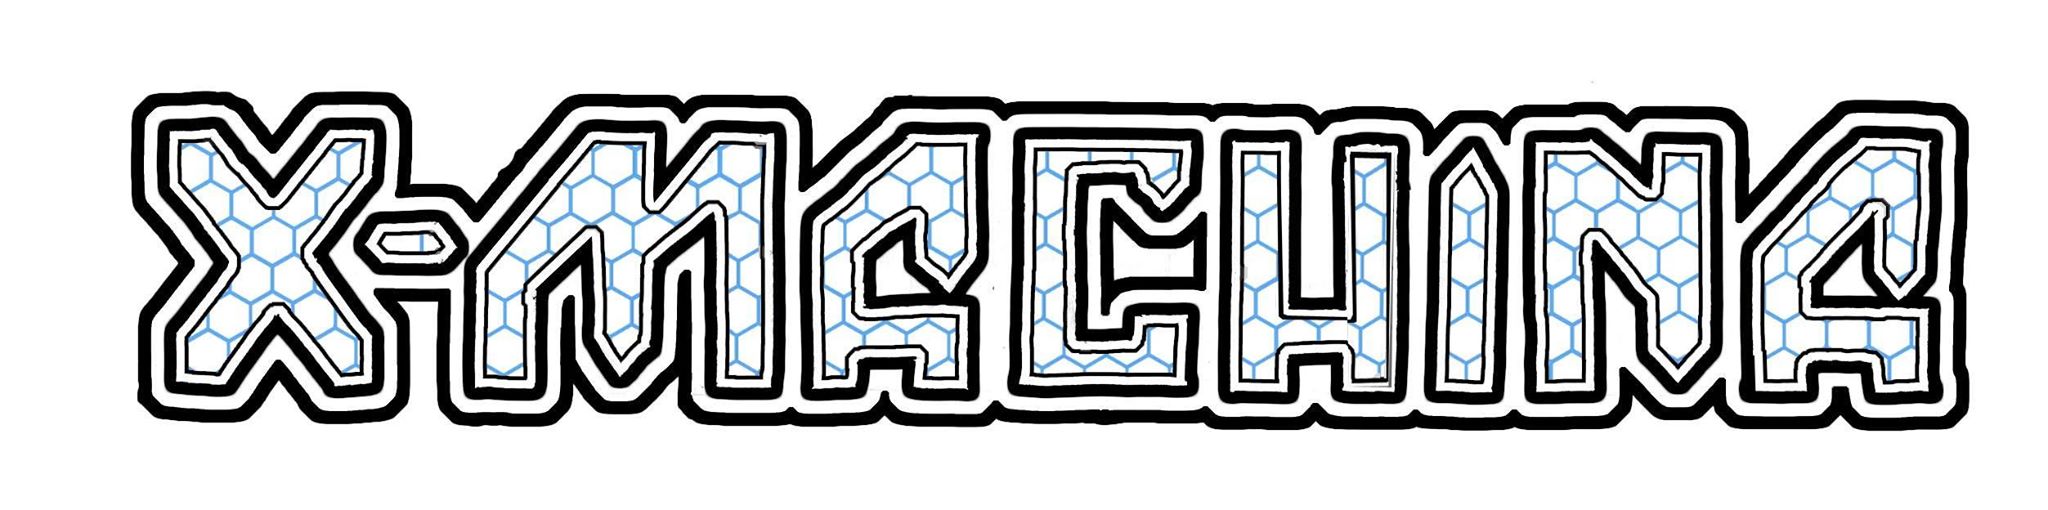 x-Machina logo front.jpg